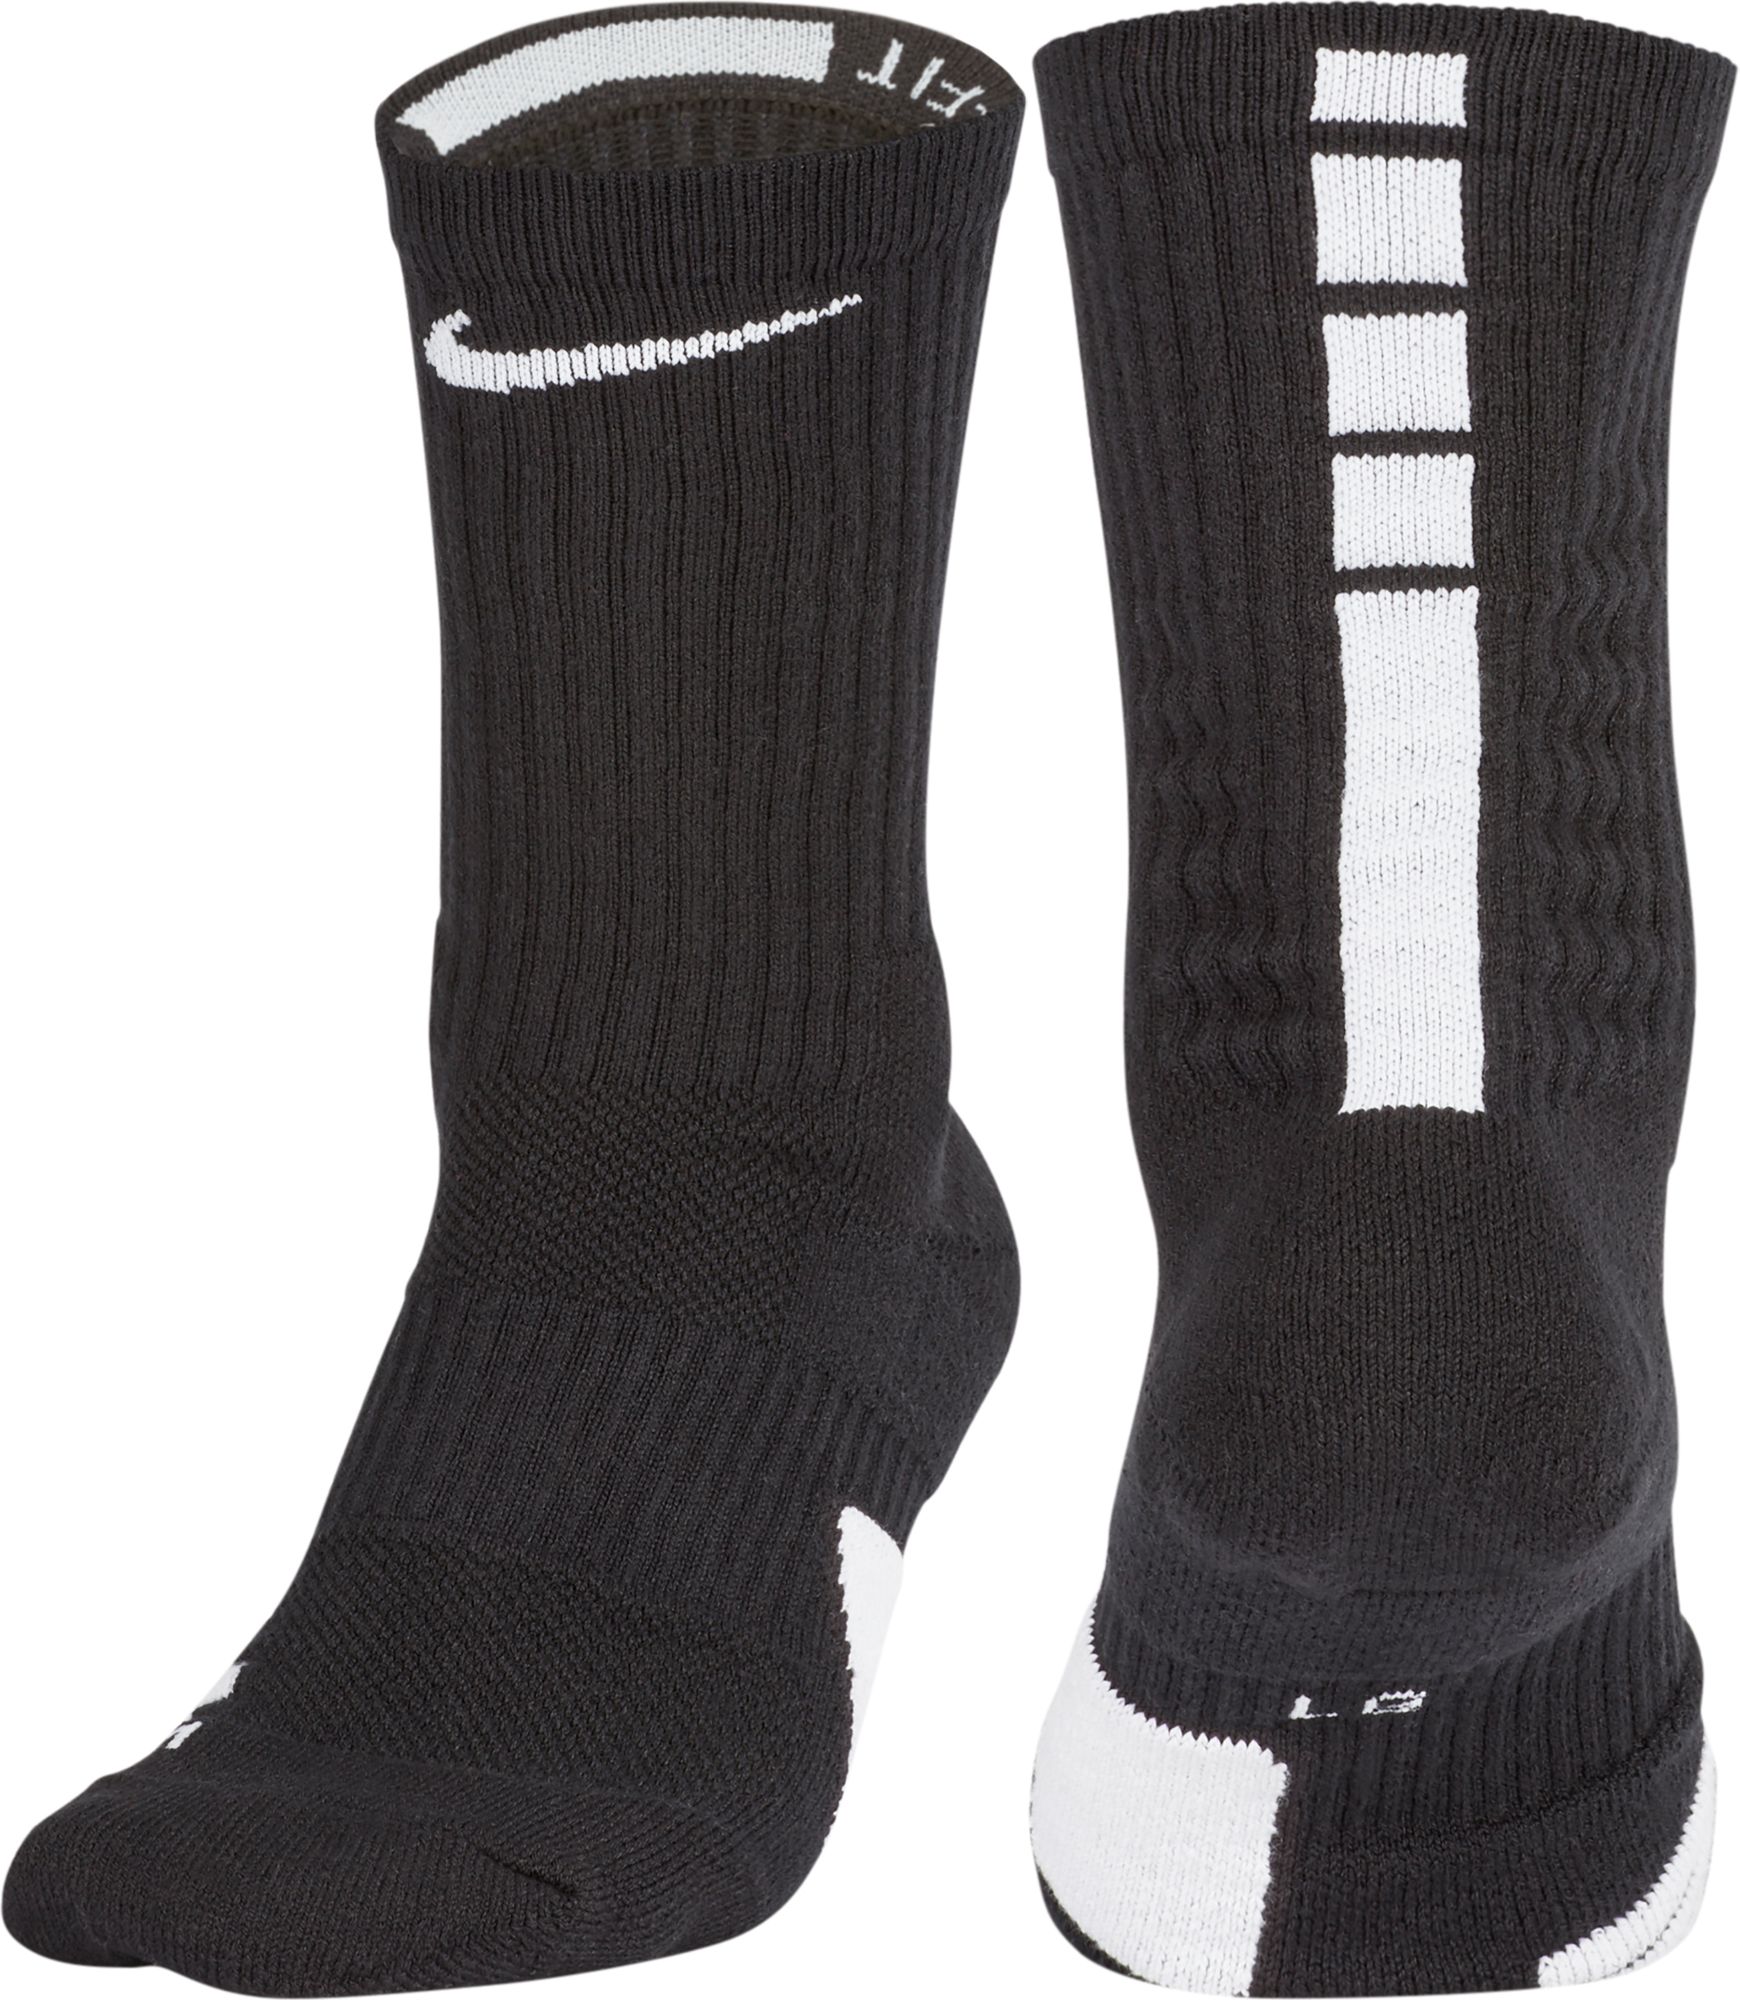 black nike basketball socks